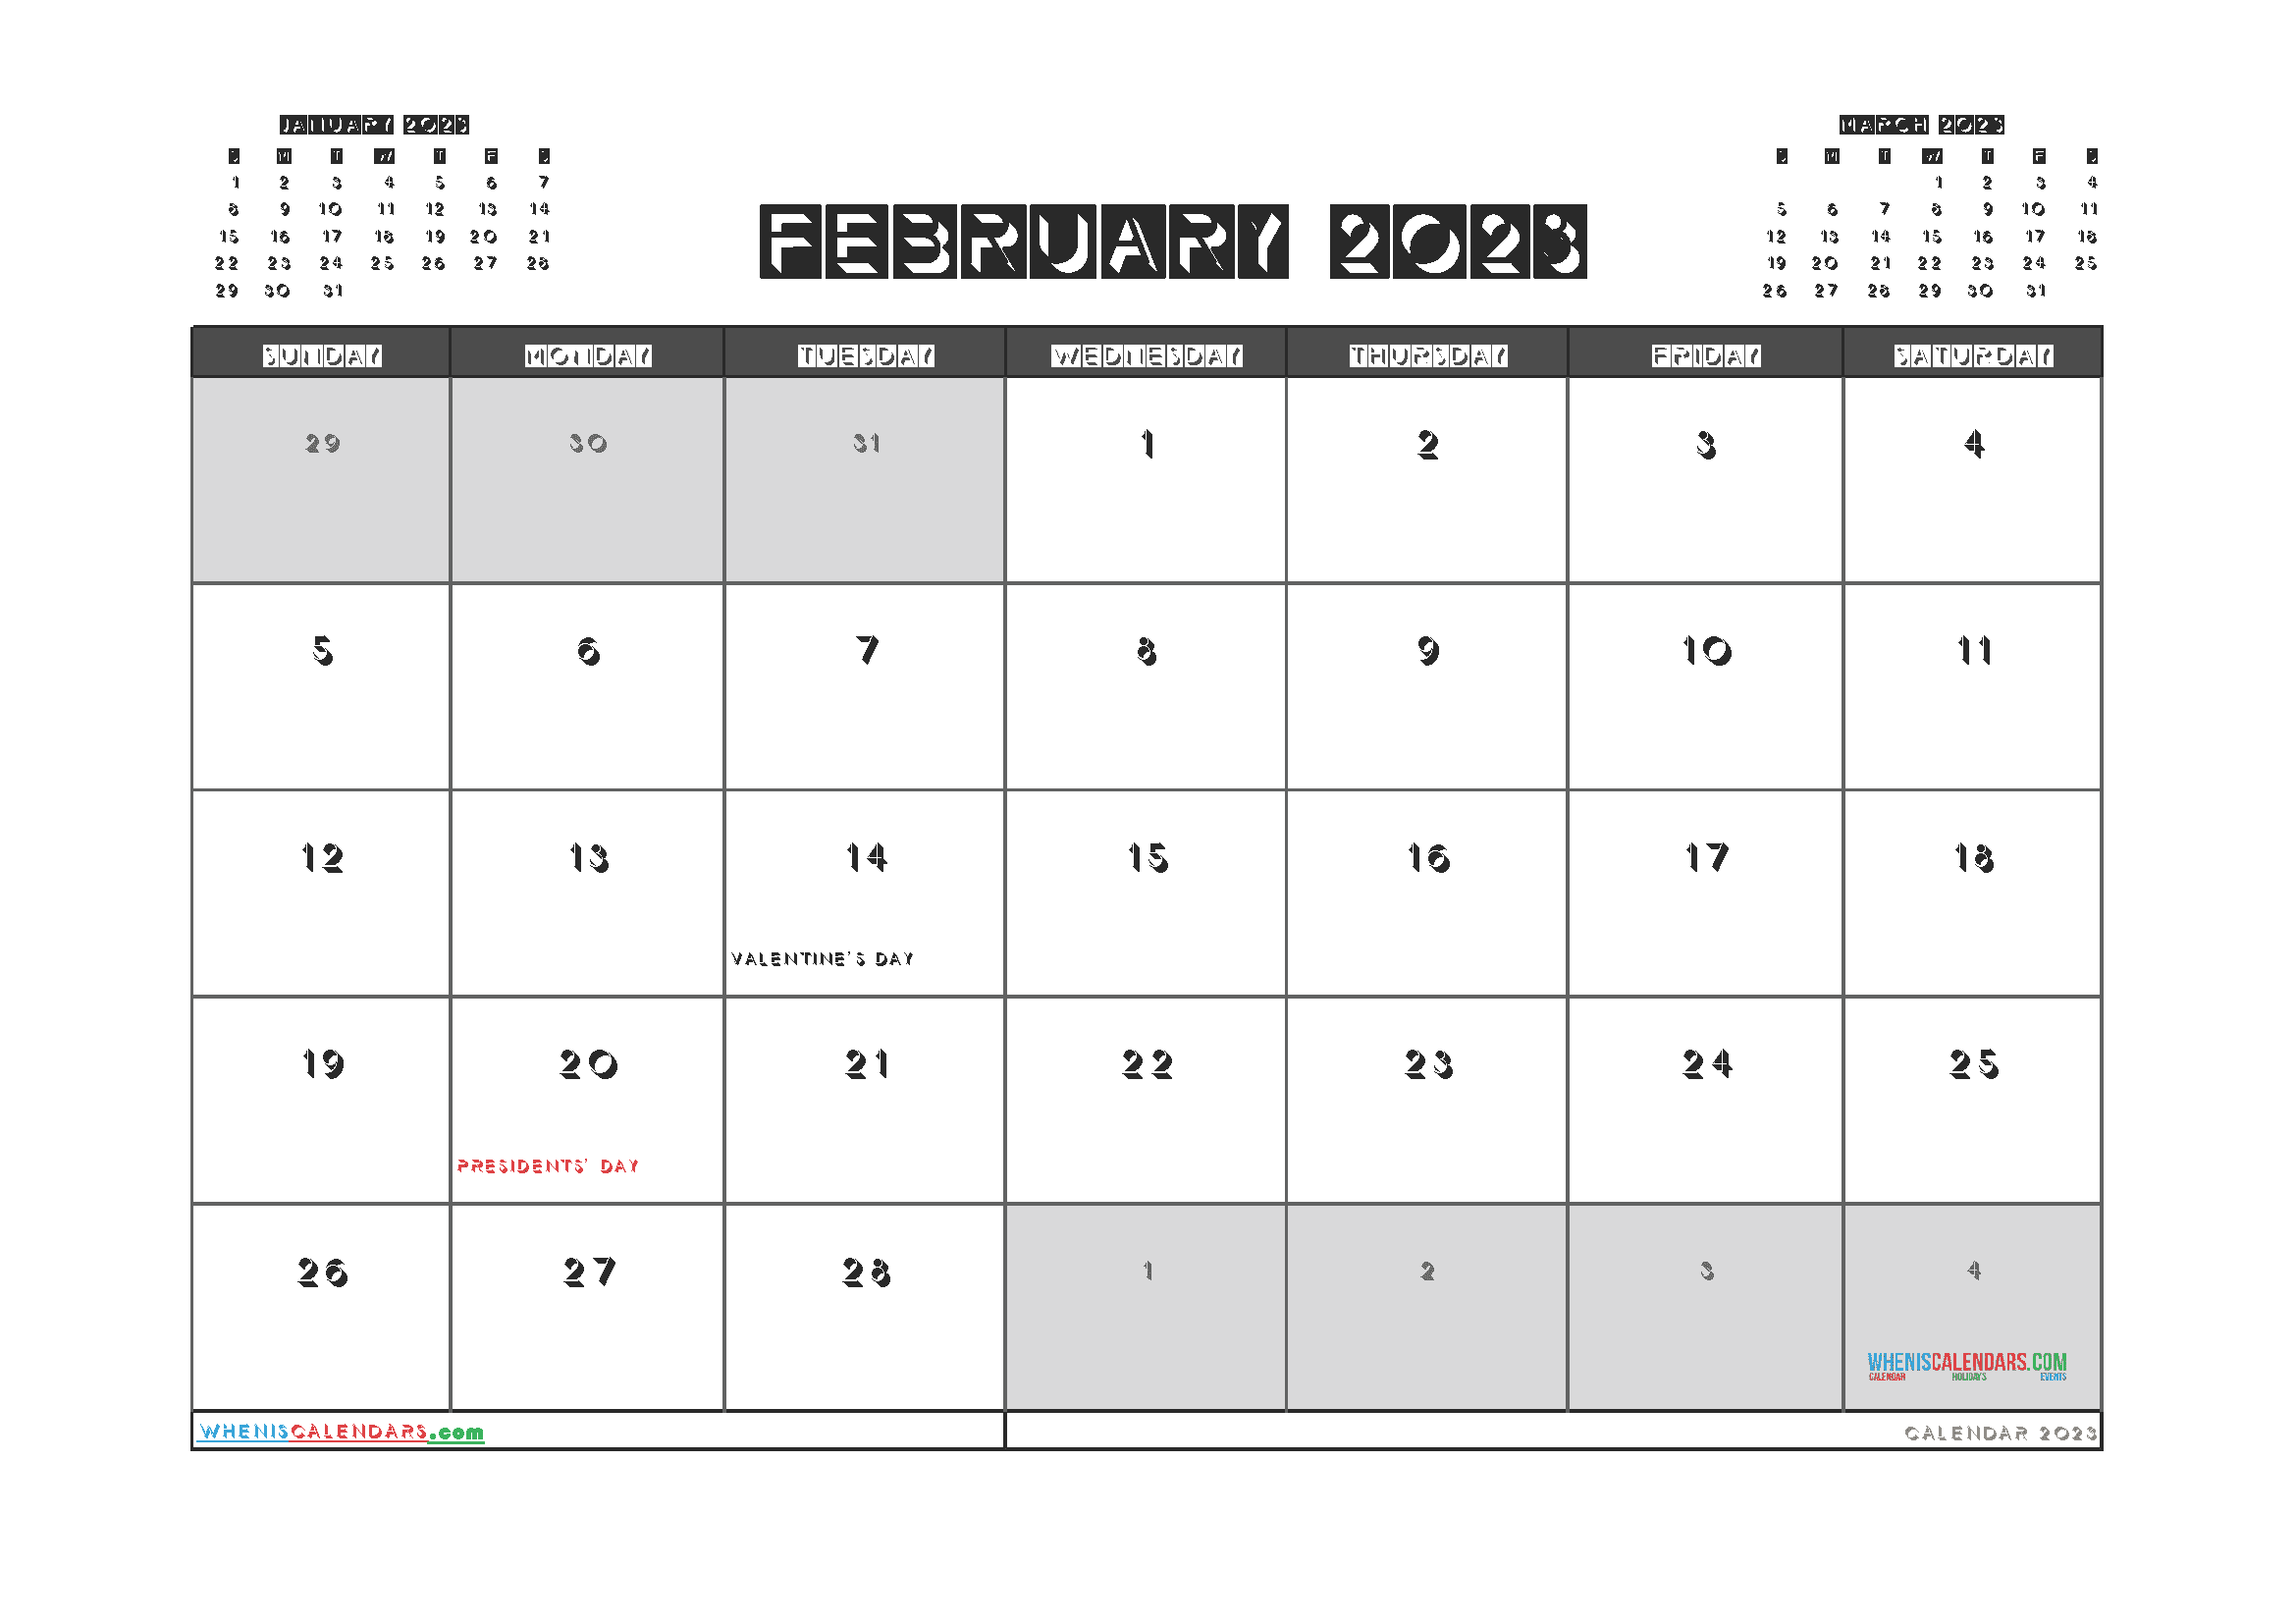 February 2023 Calendar with Holidays Printable